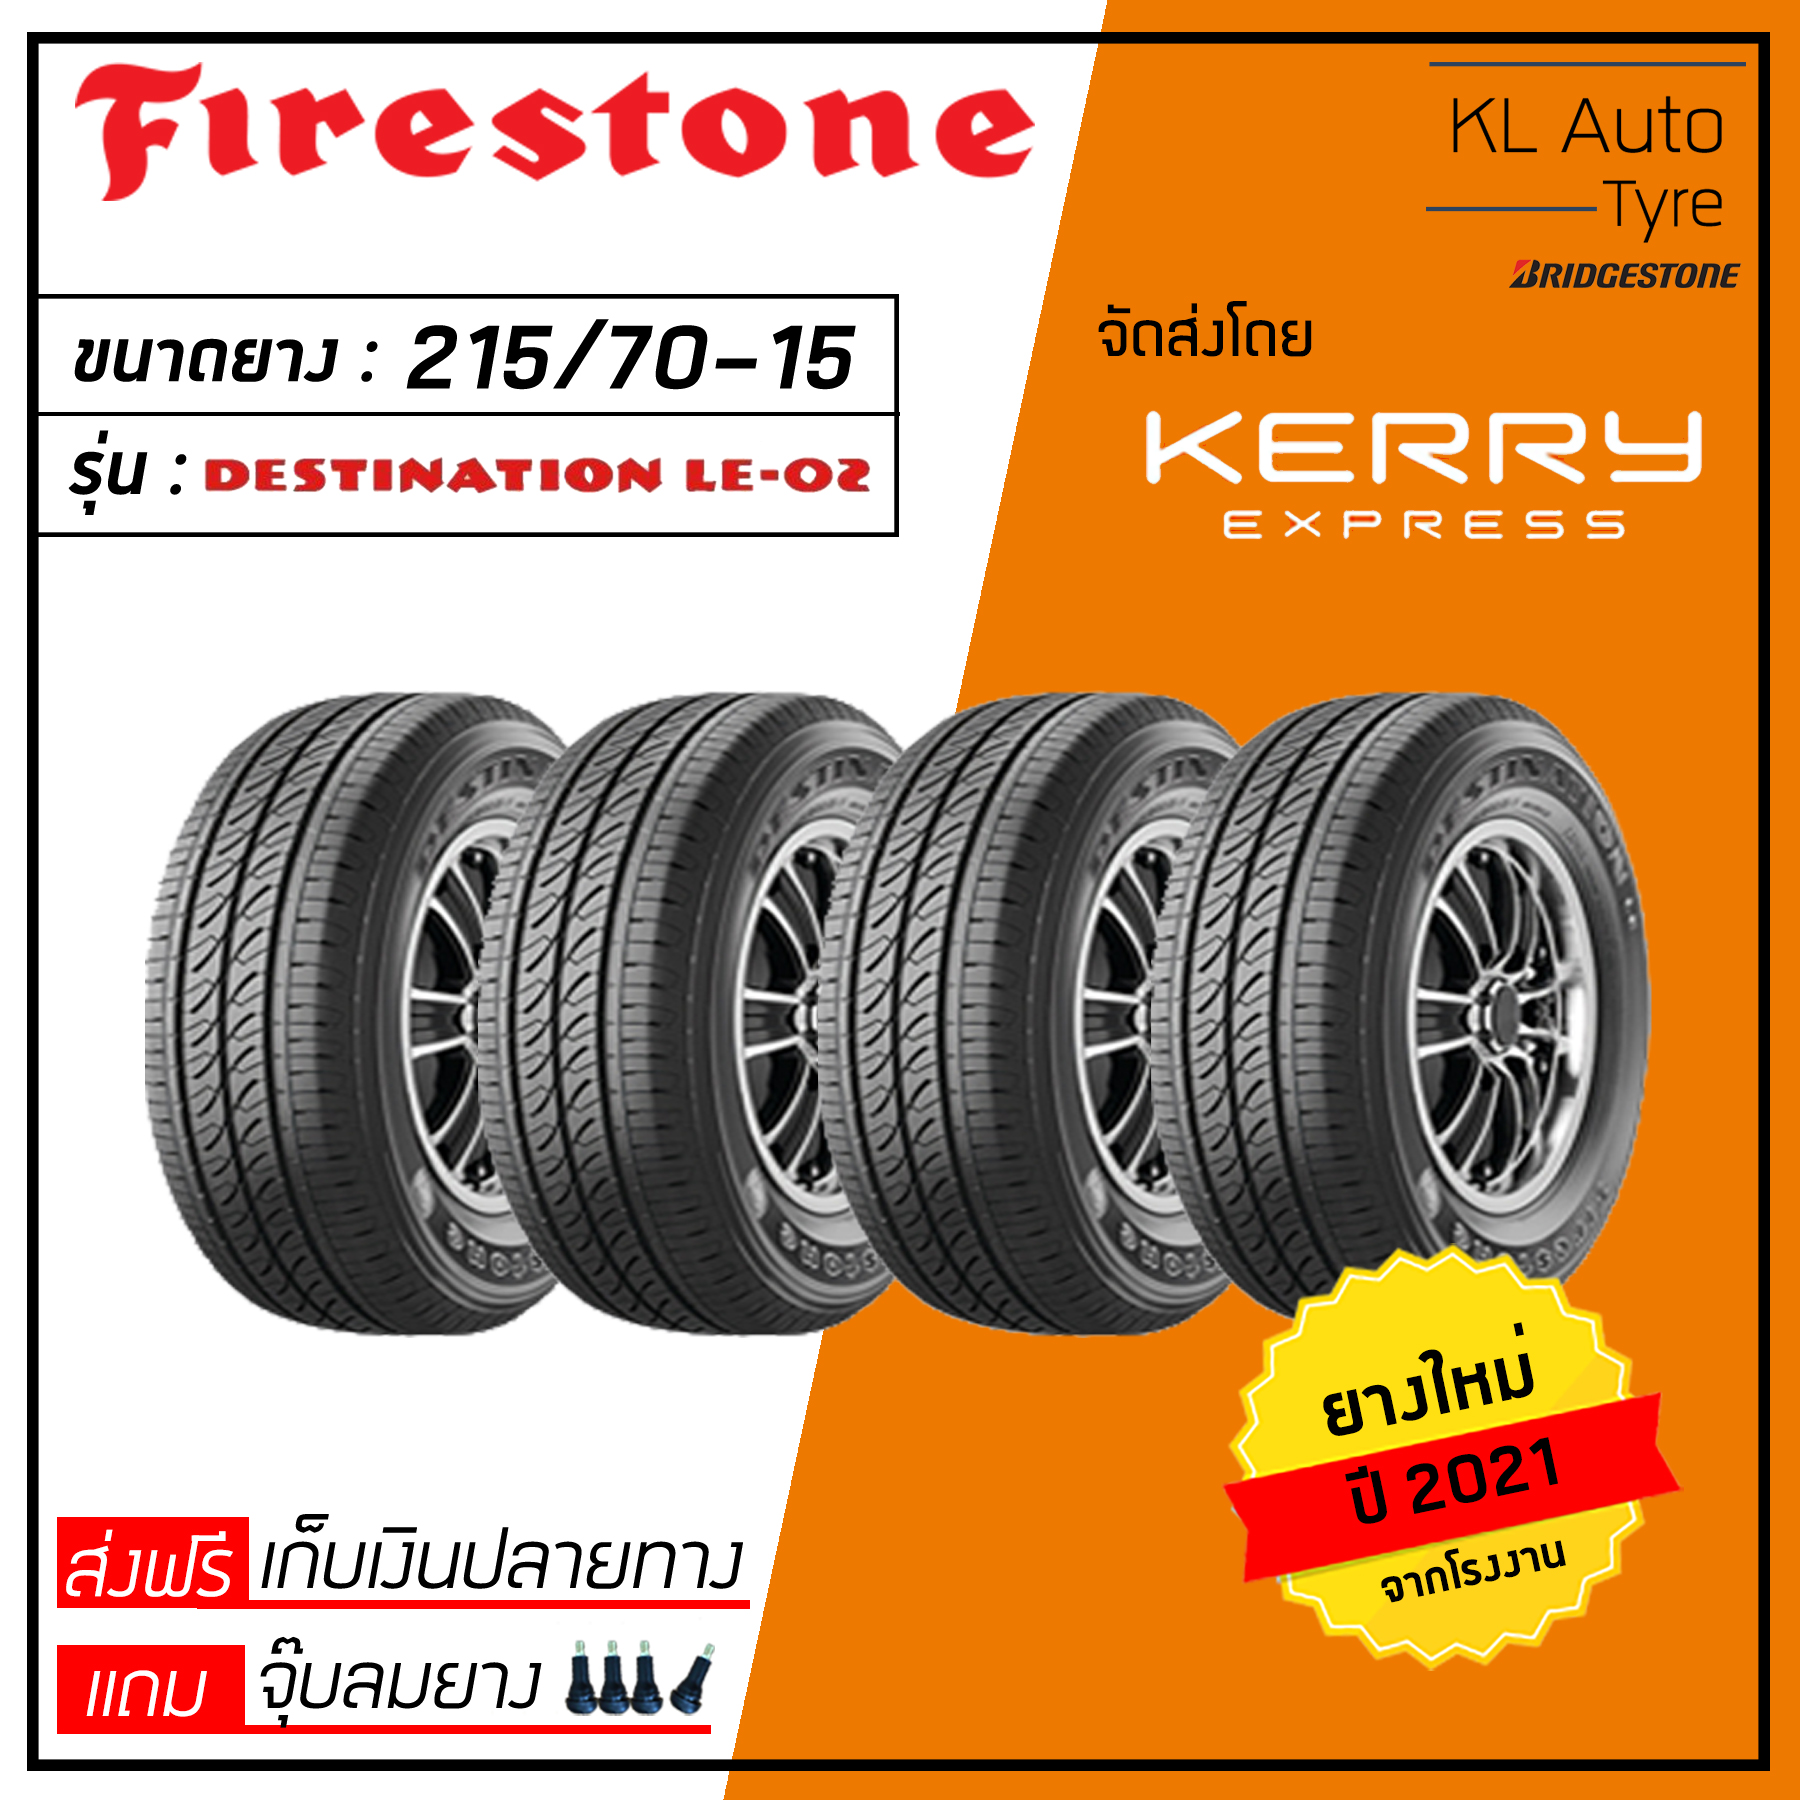 Firestone 215/70-15 LE-02 4 เส้น ปี 21 (ฟรี จุ๊บยาง 4 ตัว มูลค่า 200 บาท)